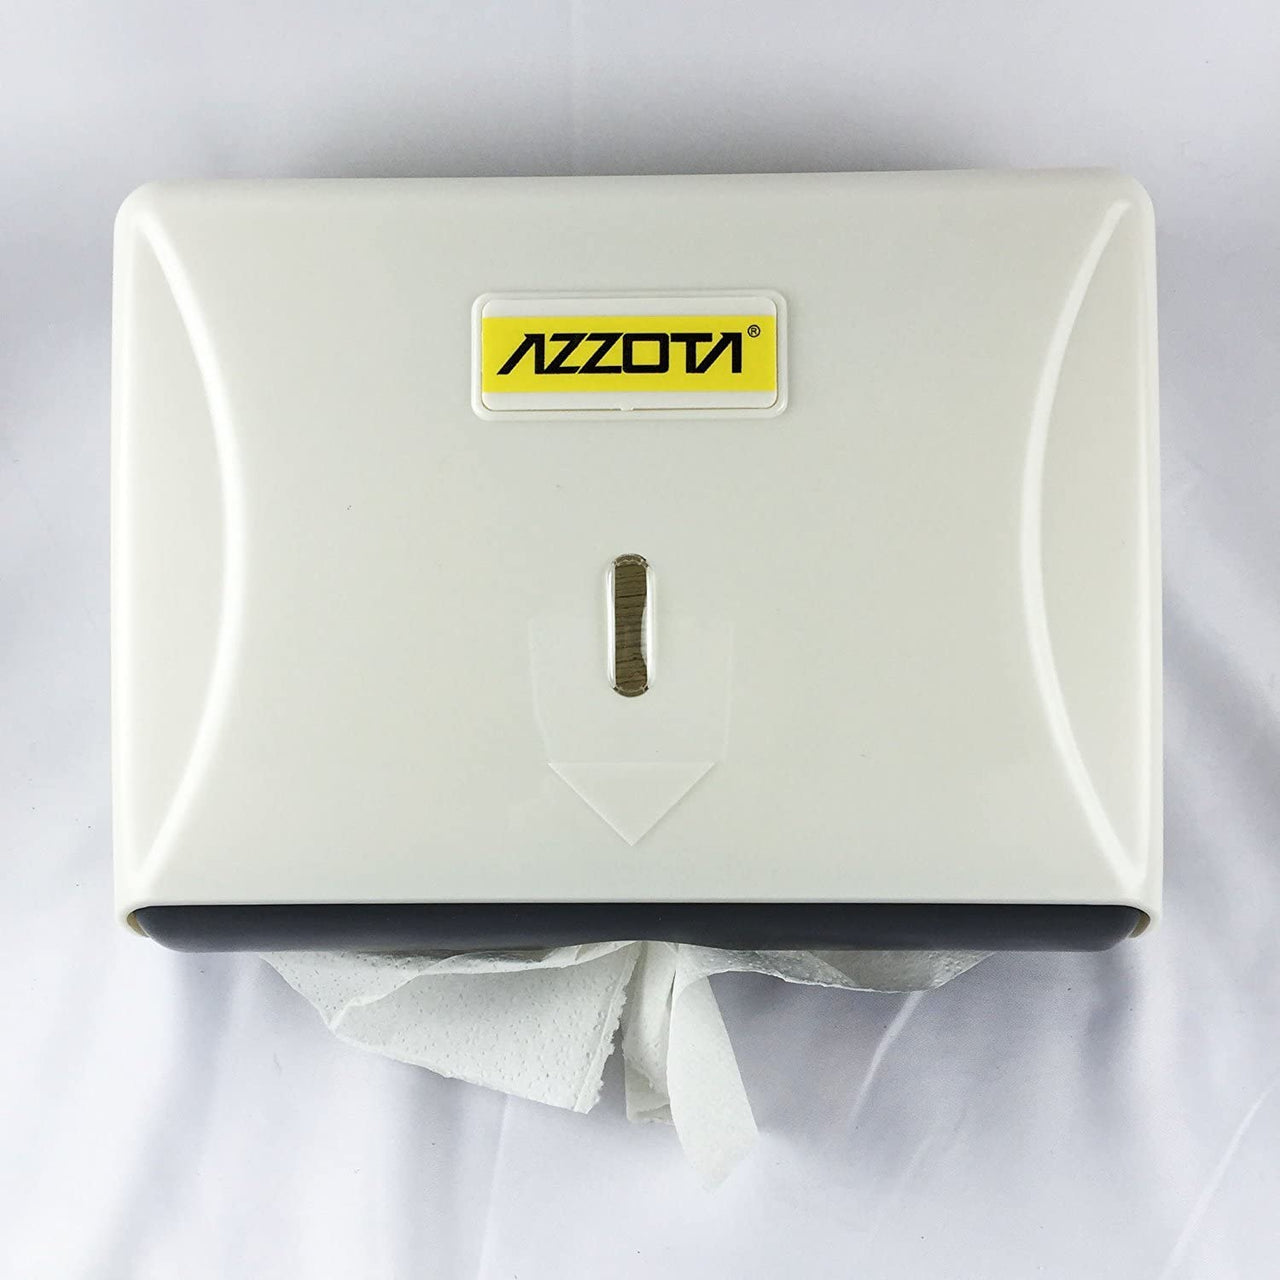 AZZOTA® Lab Paper Towel Dispenser